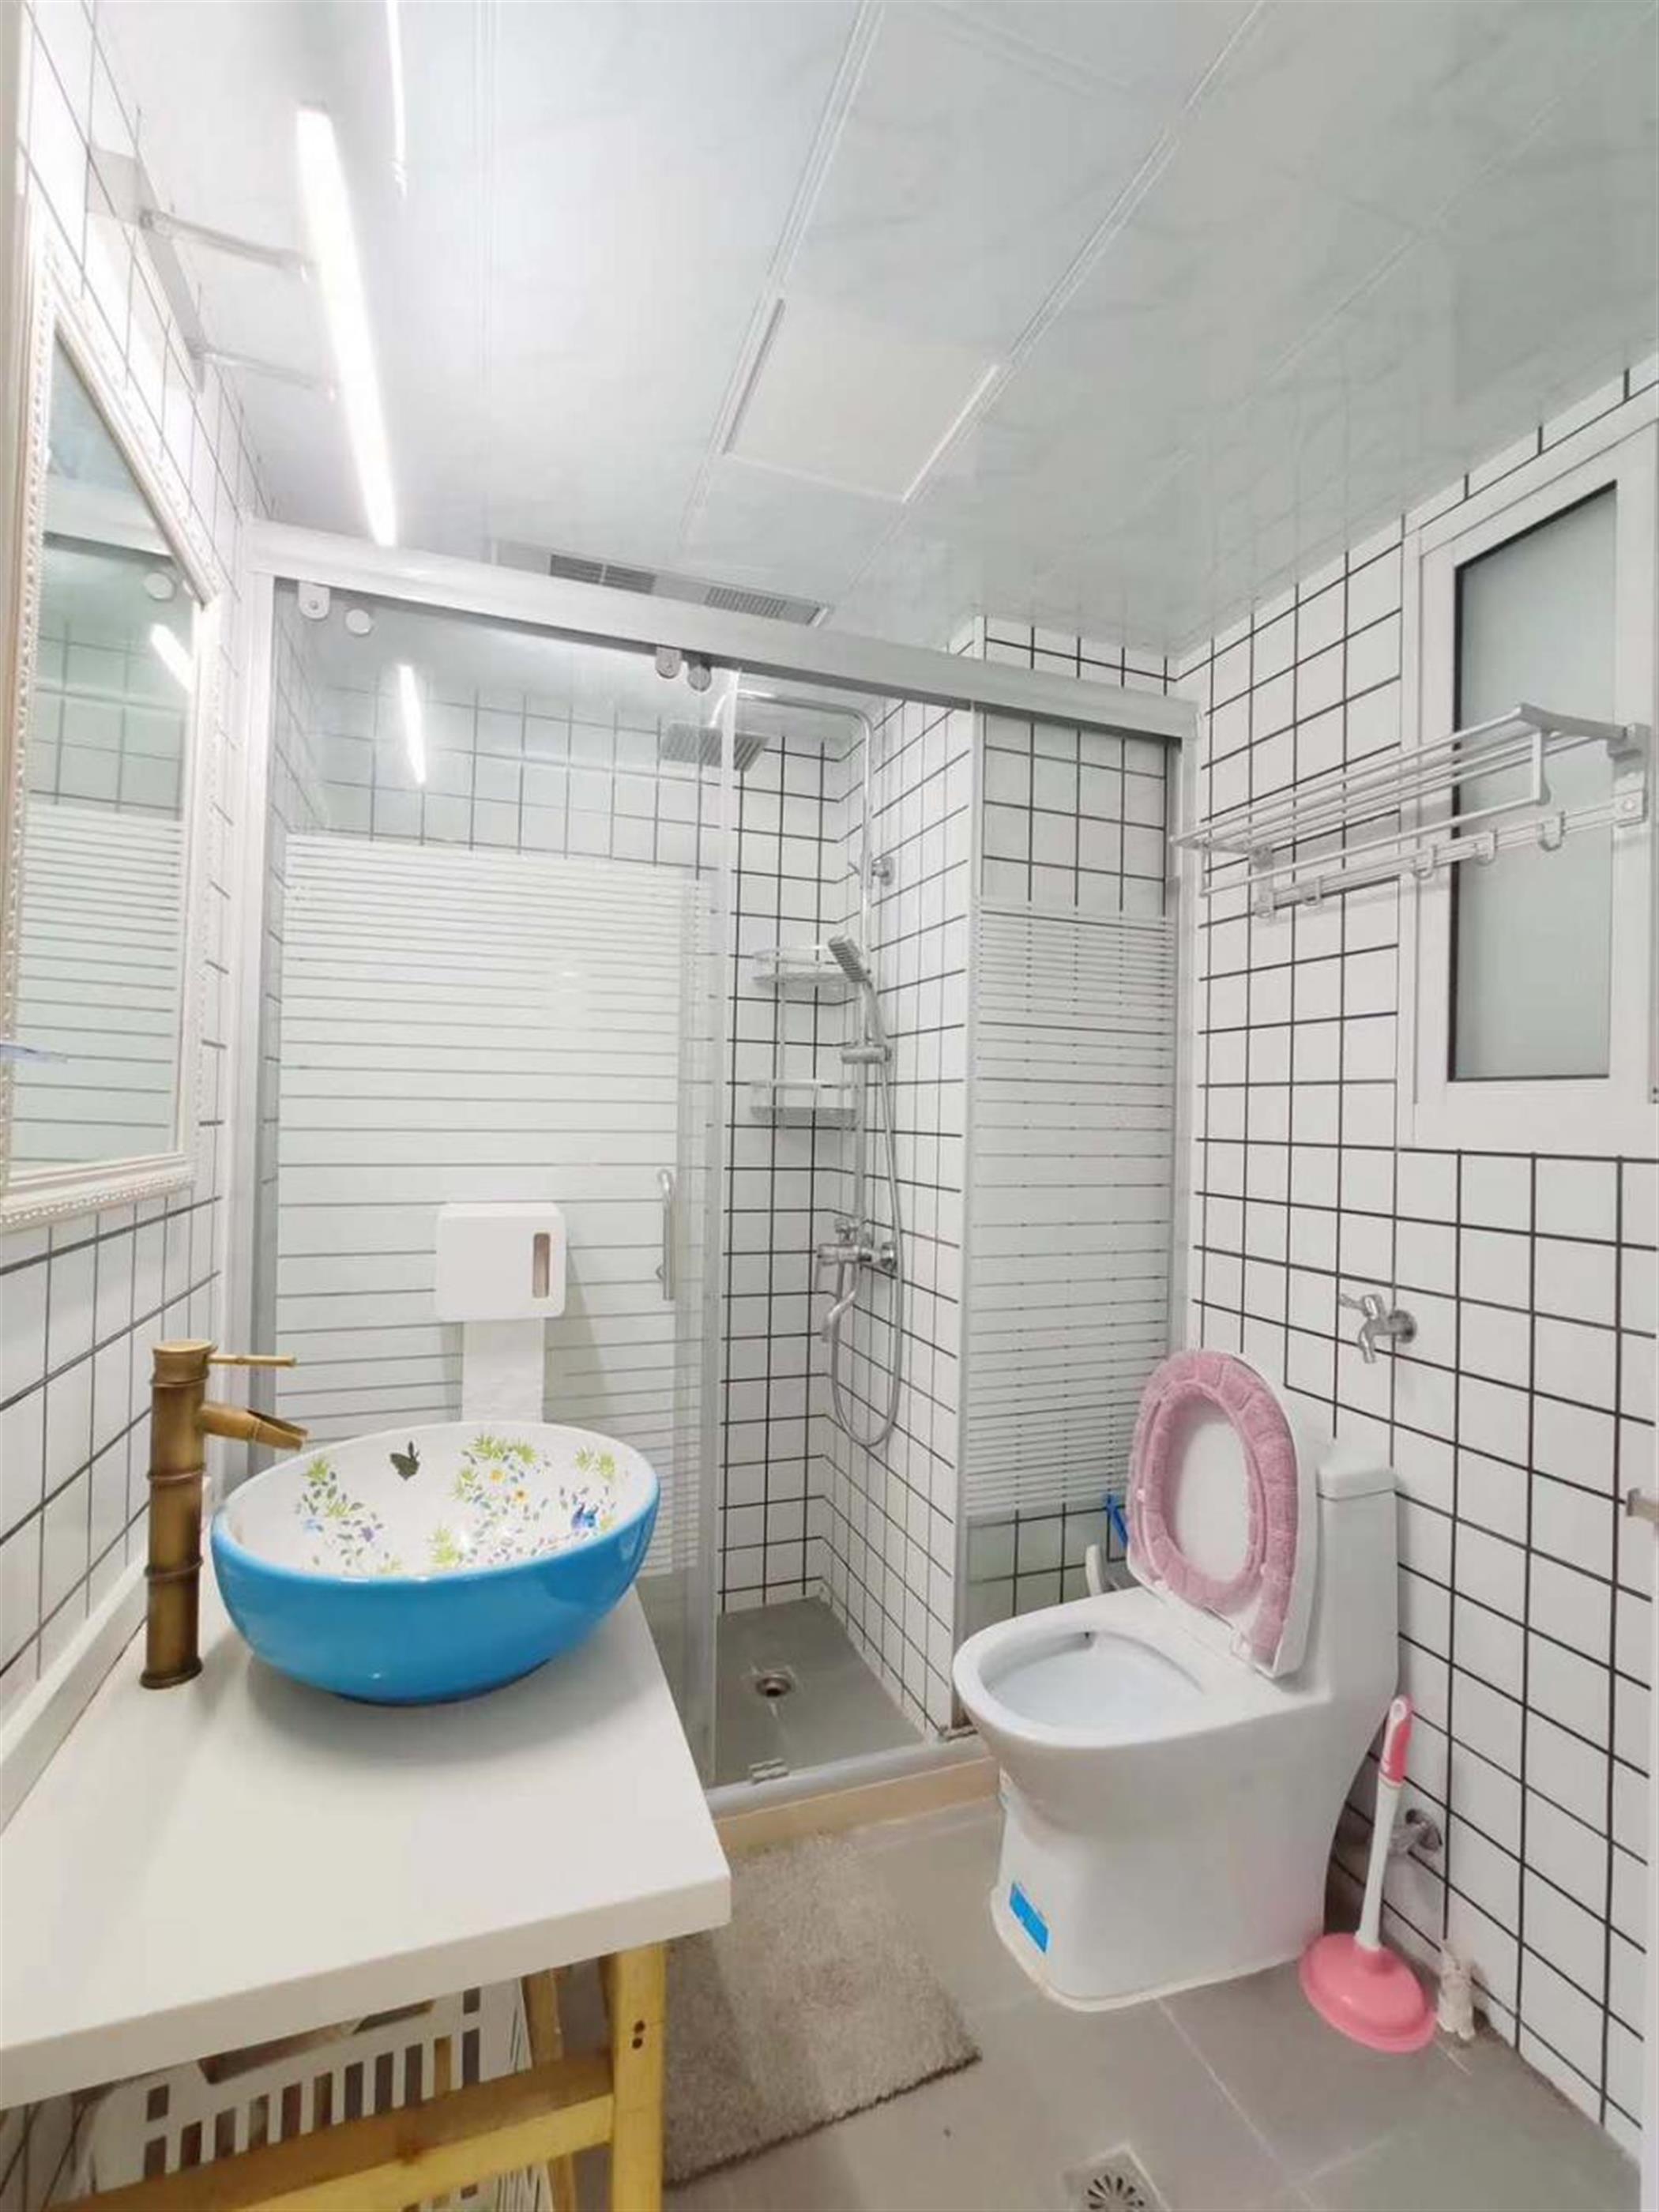 Clean Bathroom Bright Clean Affordable Huaihai Road 2BR Apt Nr LN 1/10/12/13 for Rent in Shanghai